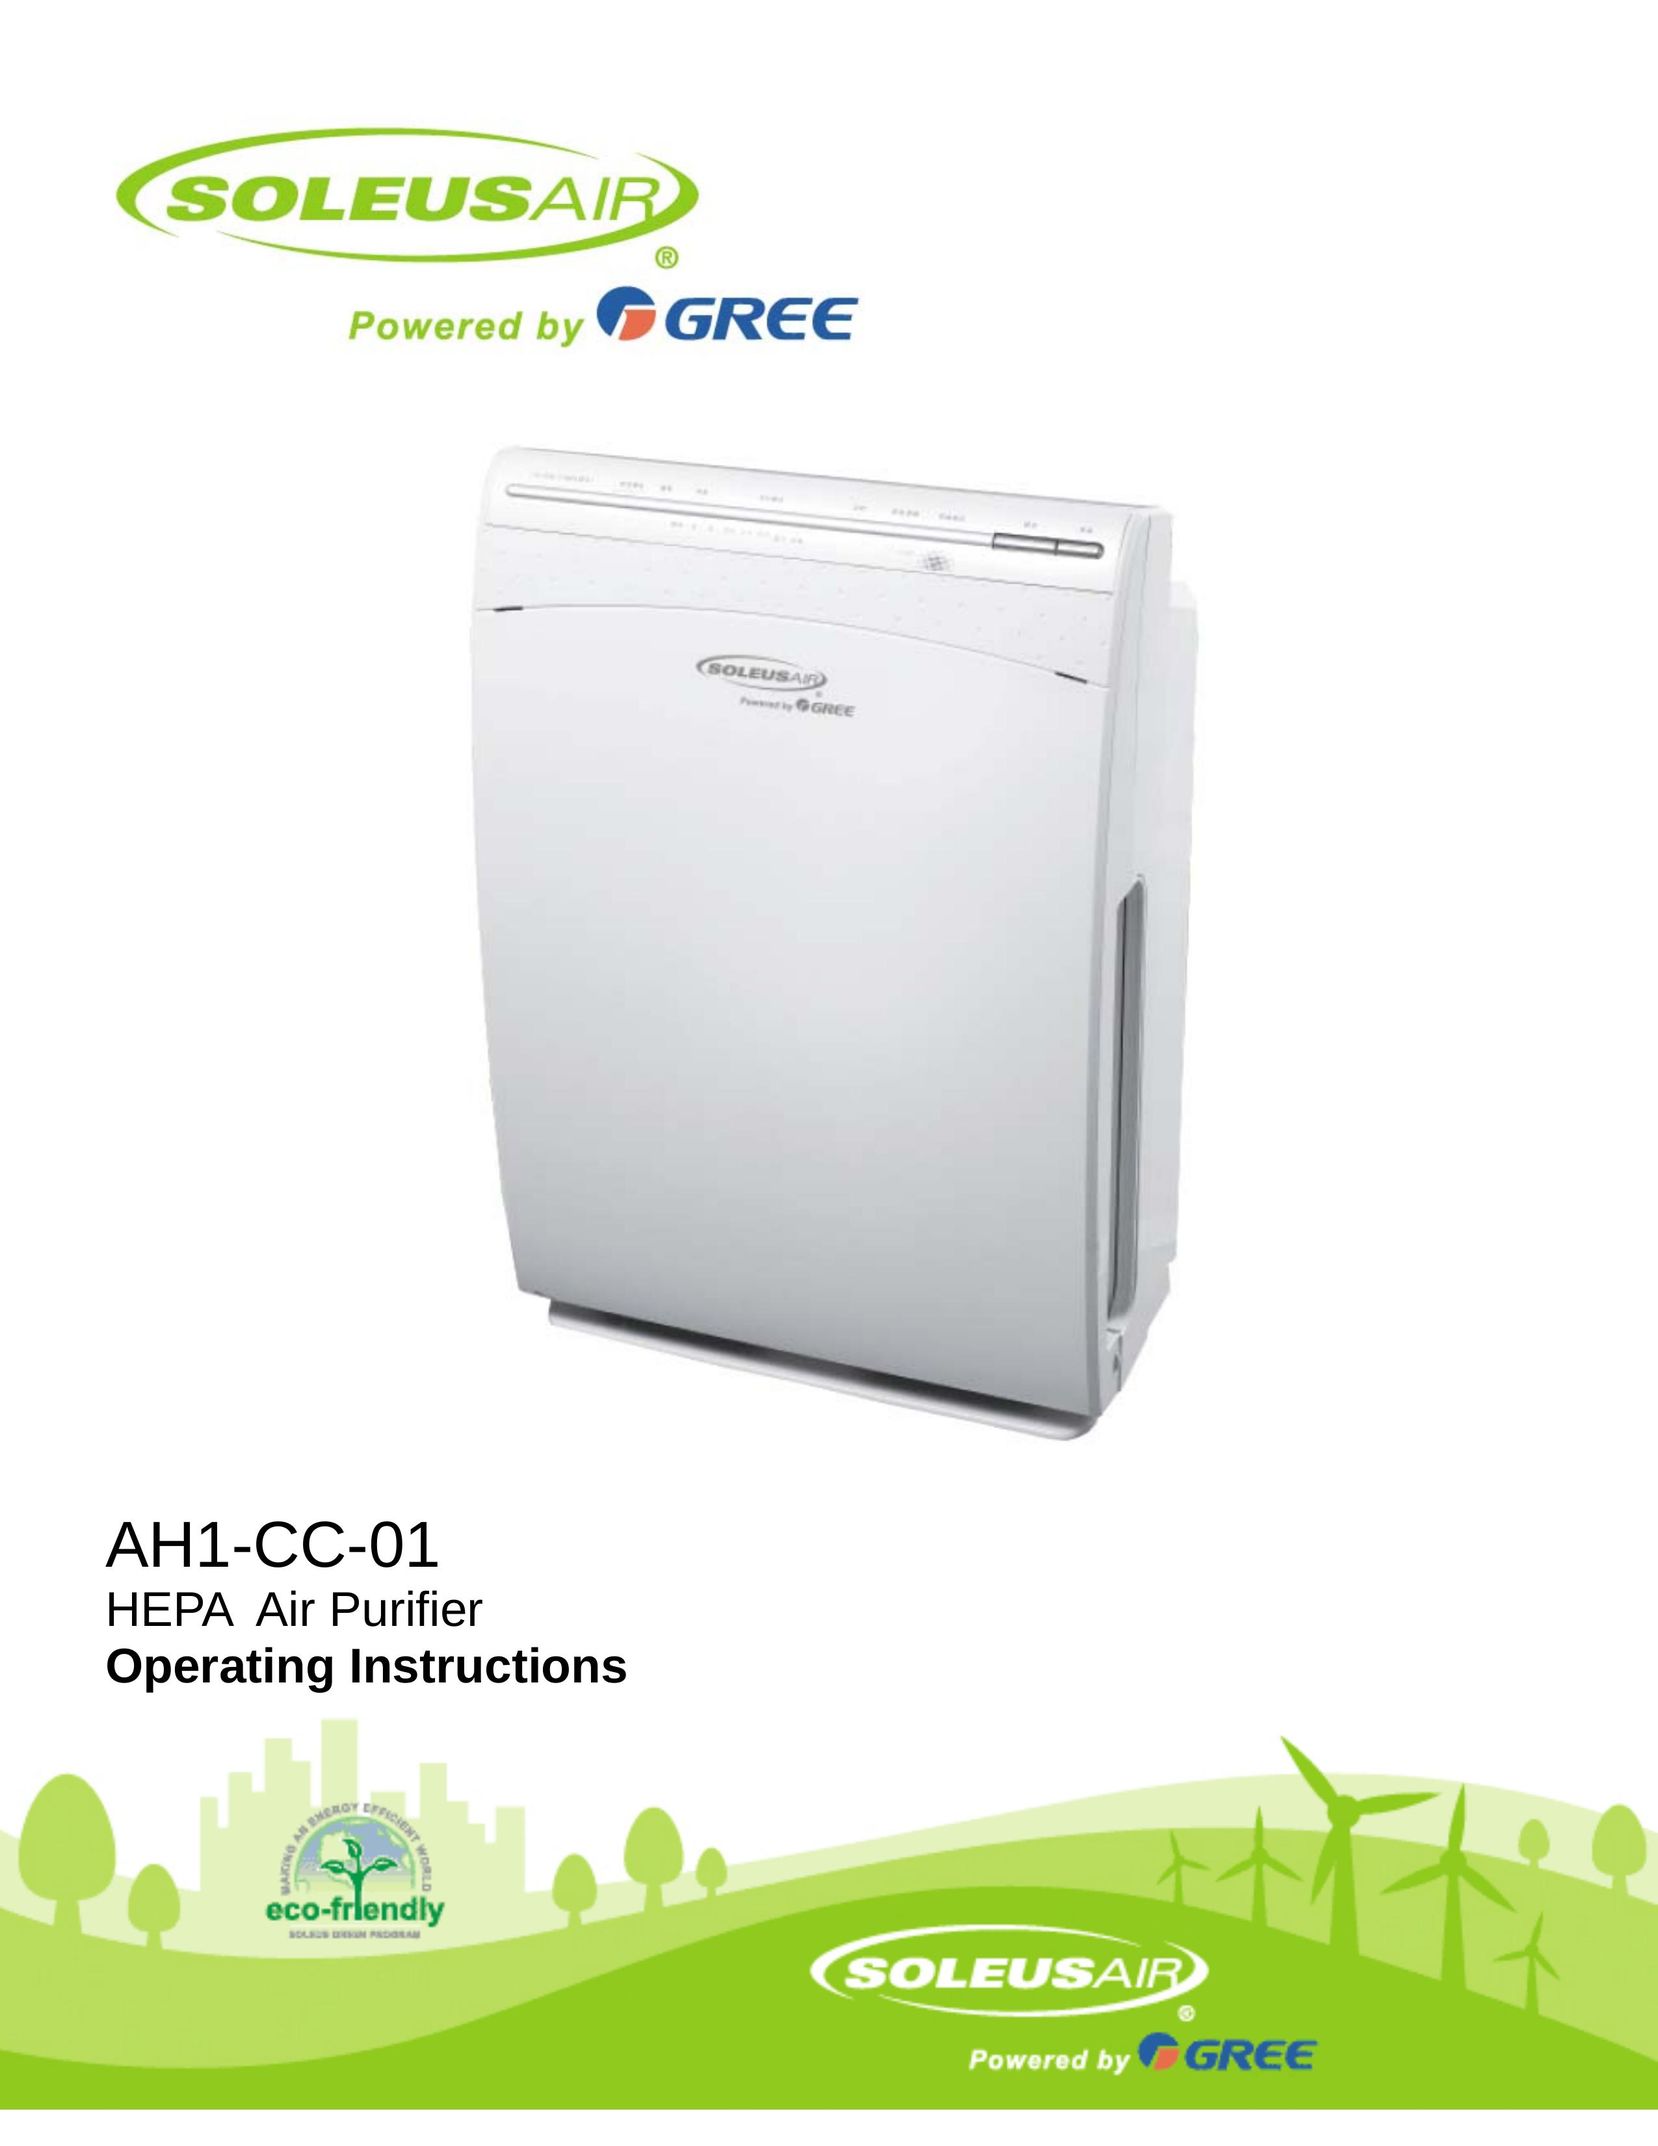 Soleus Air AH1-CC-01 Air Cleaner User Manual